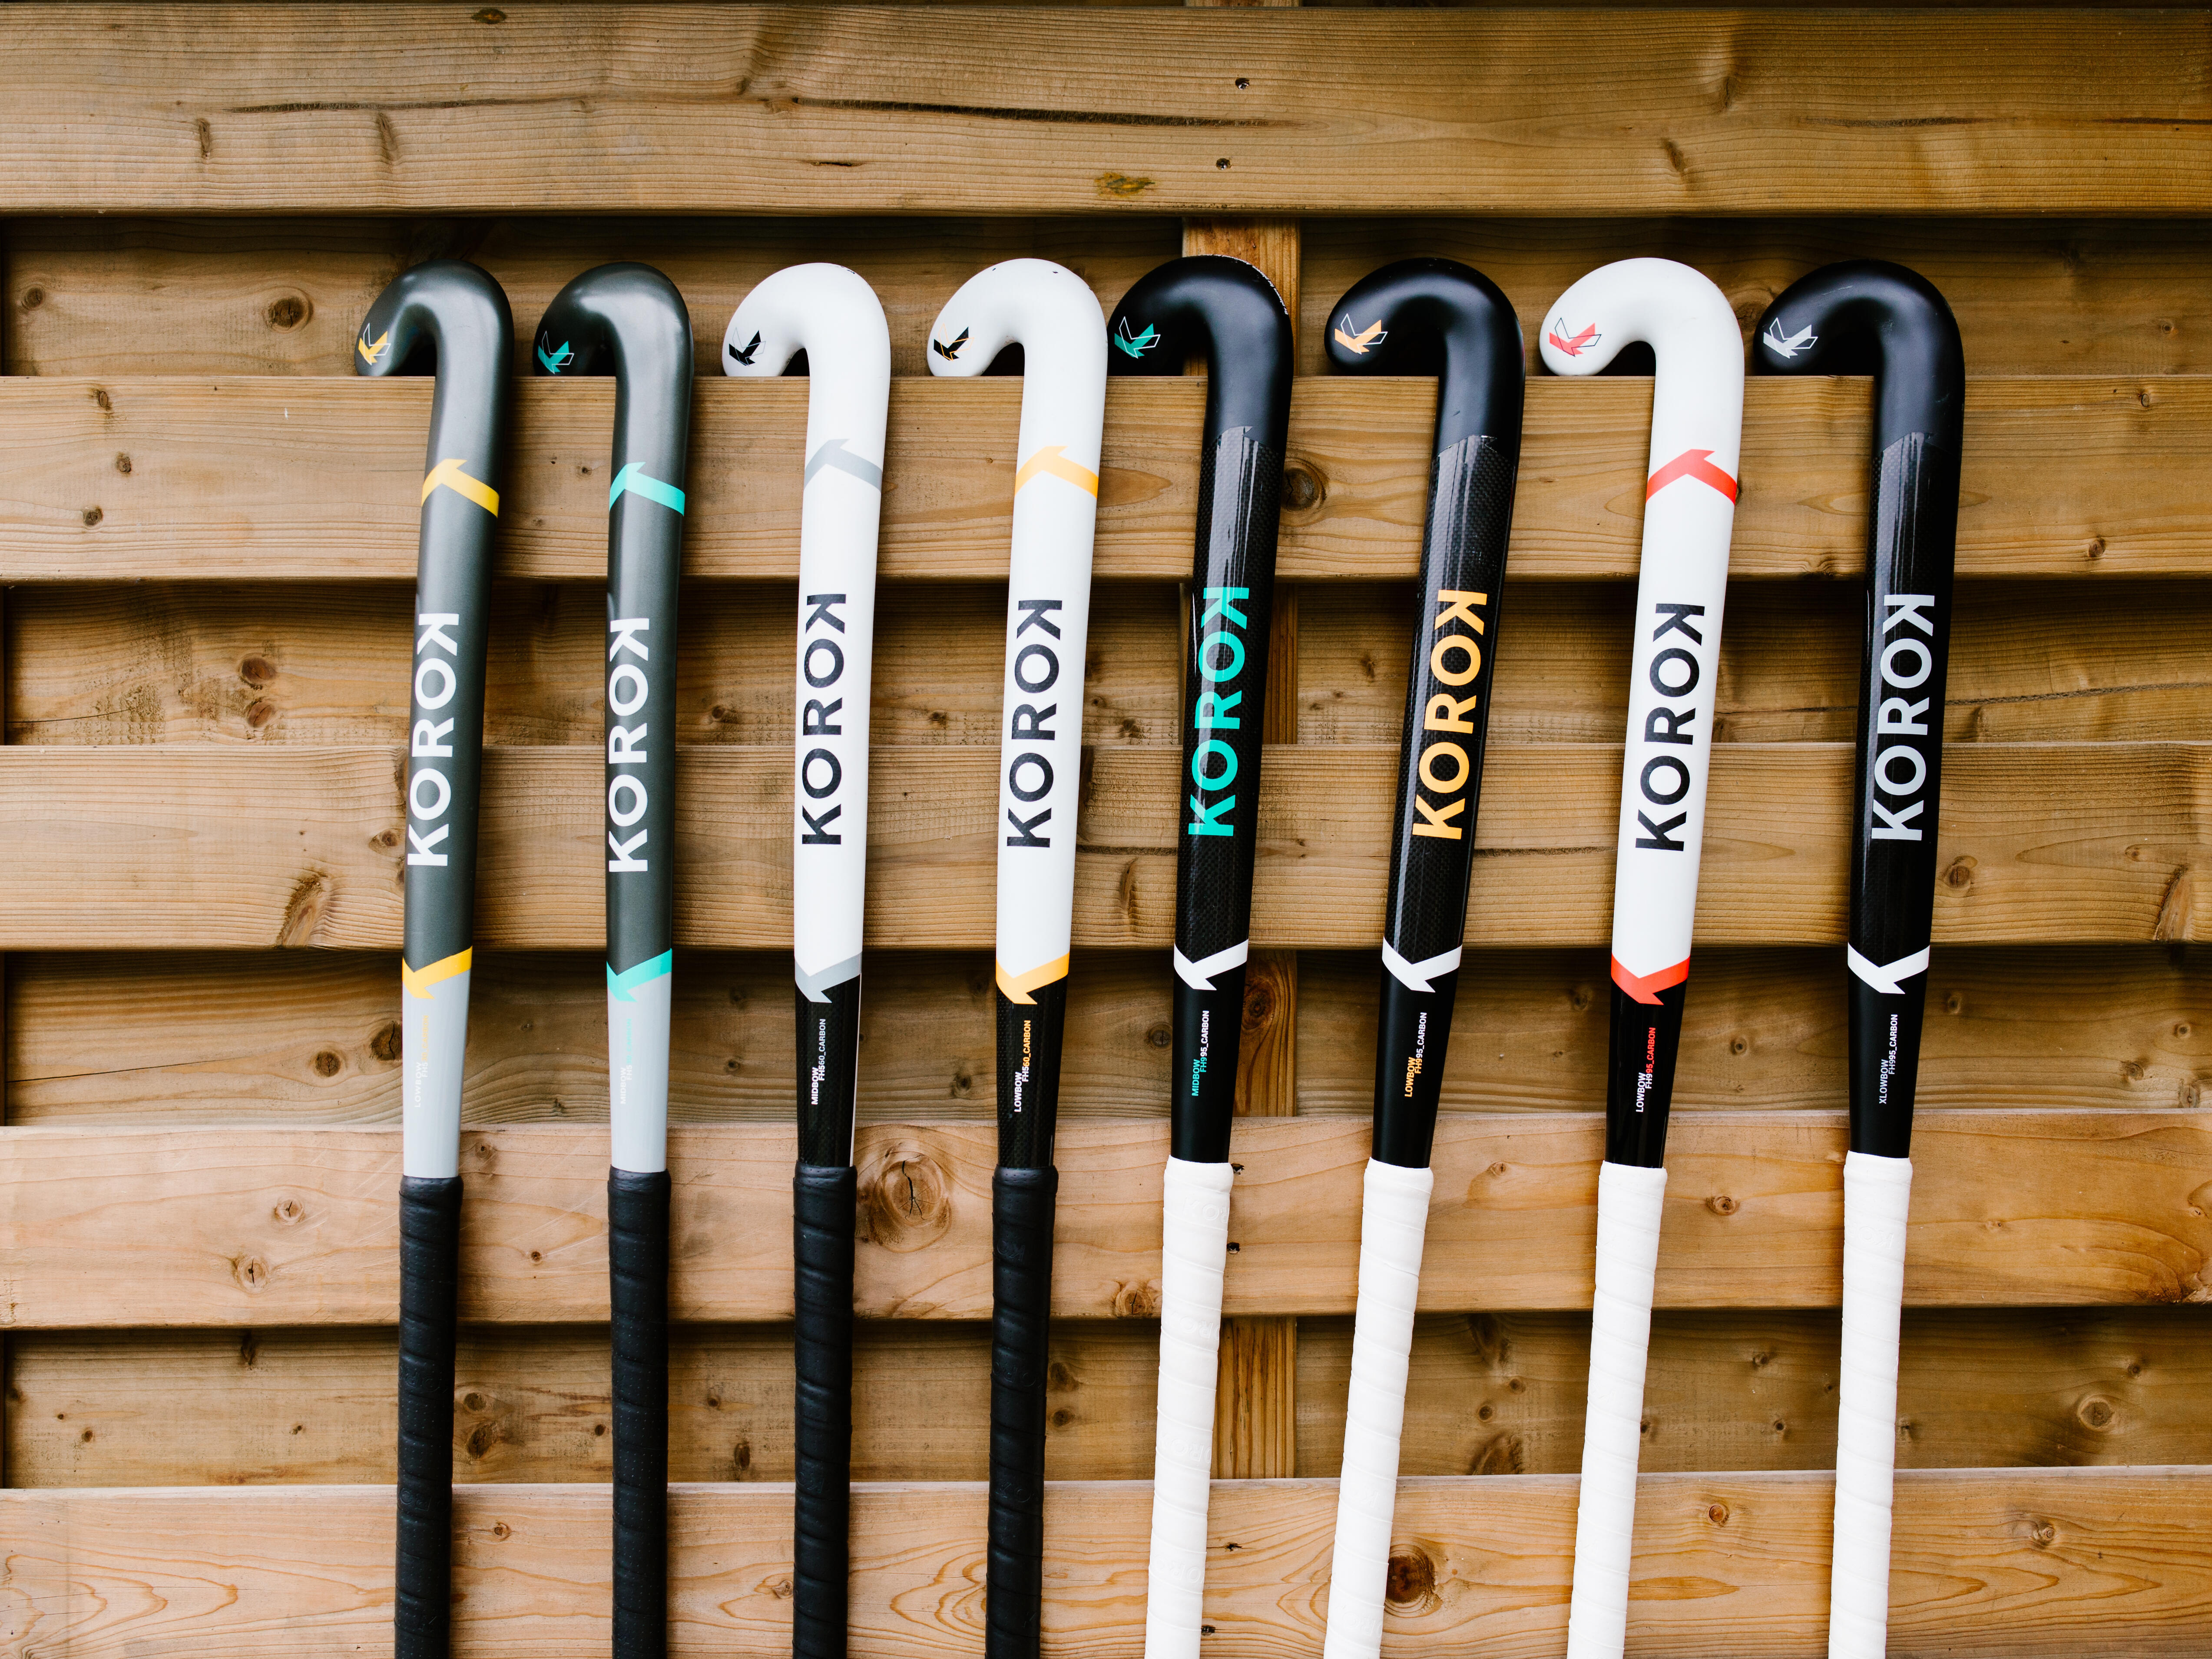 Beginner's Guide to Selecting Hockey Sticks